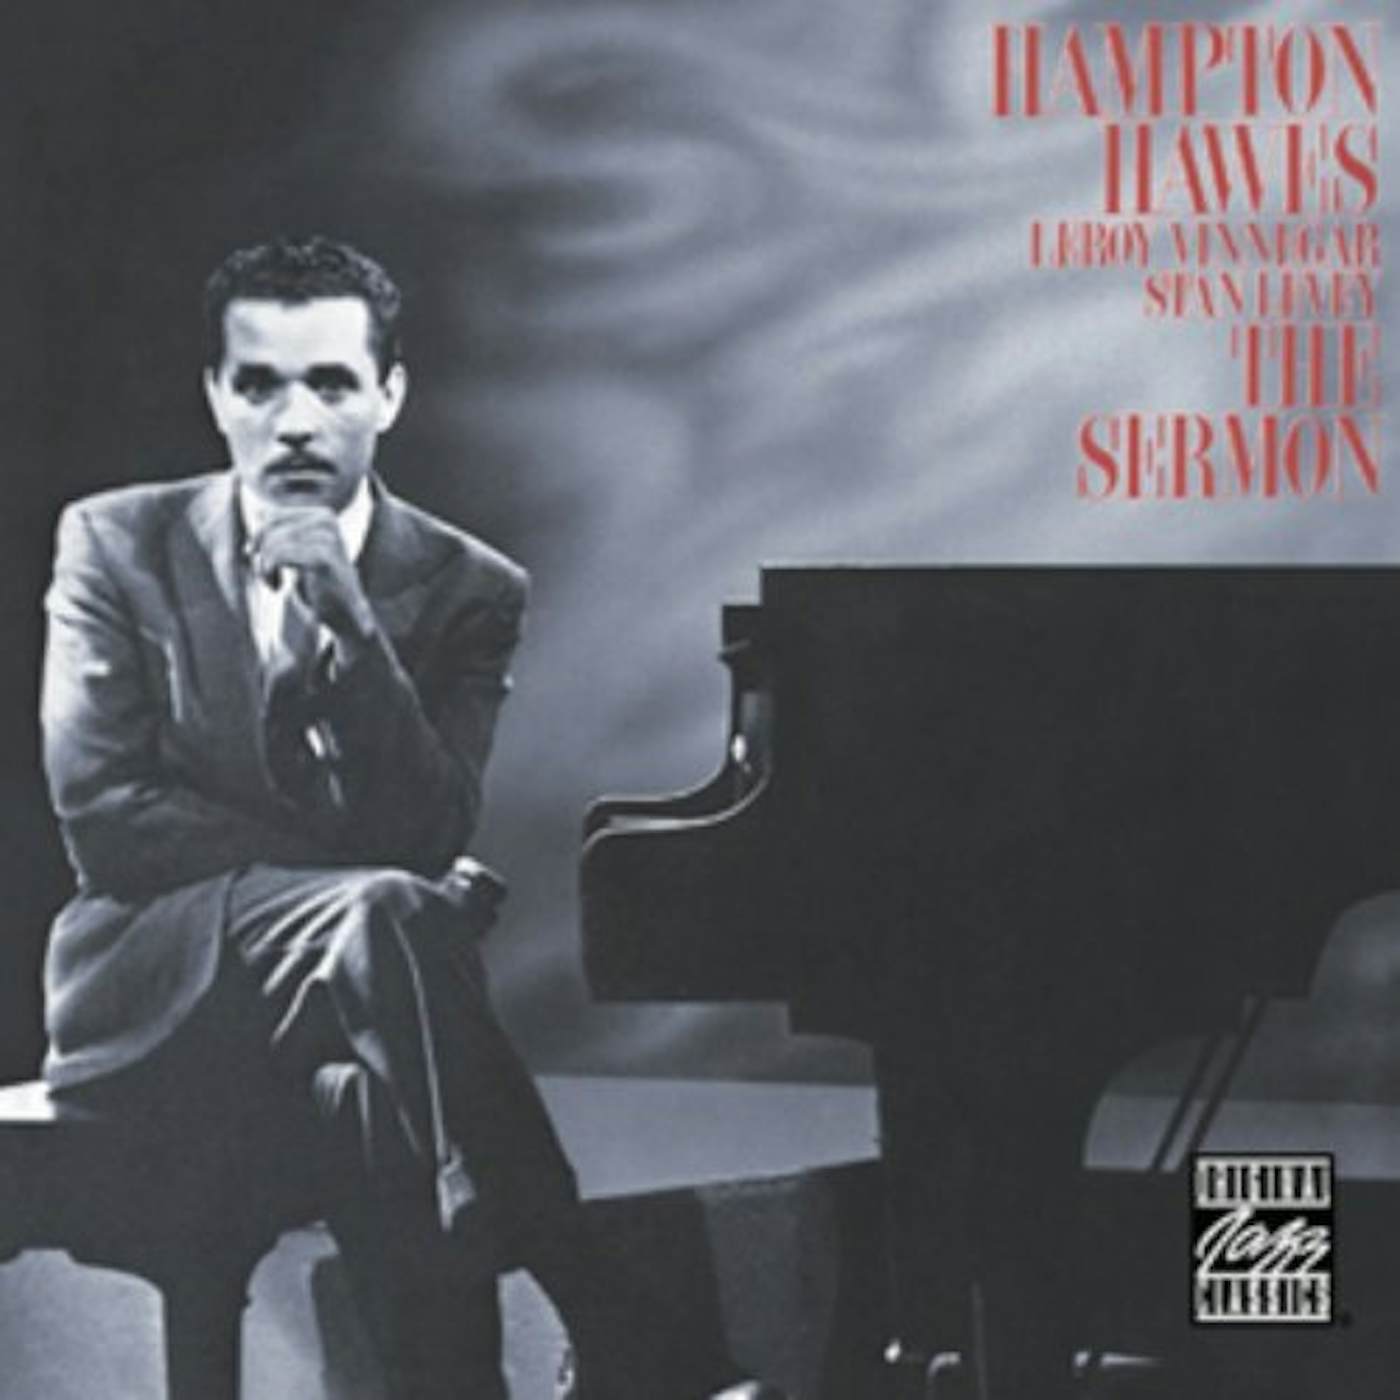 Hampton Hawes SERMON CD